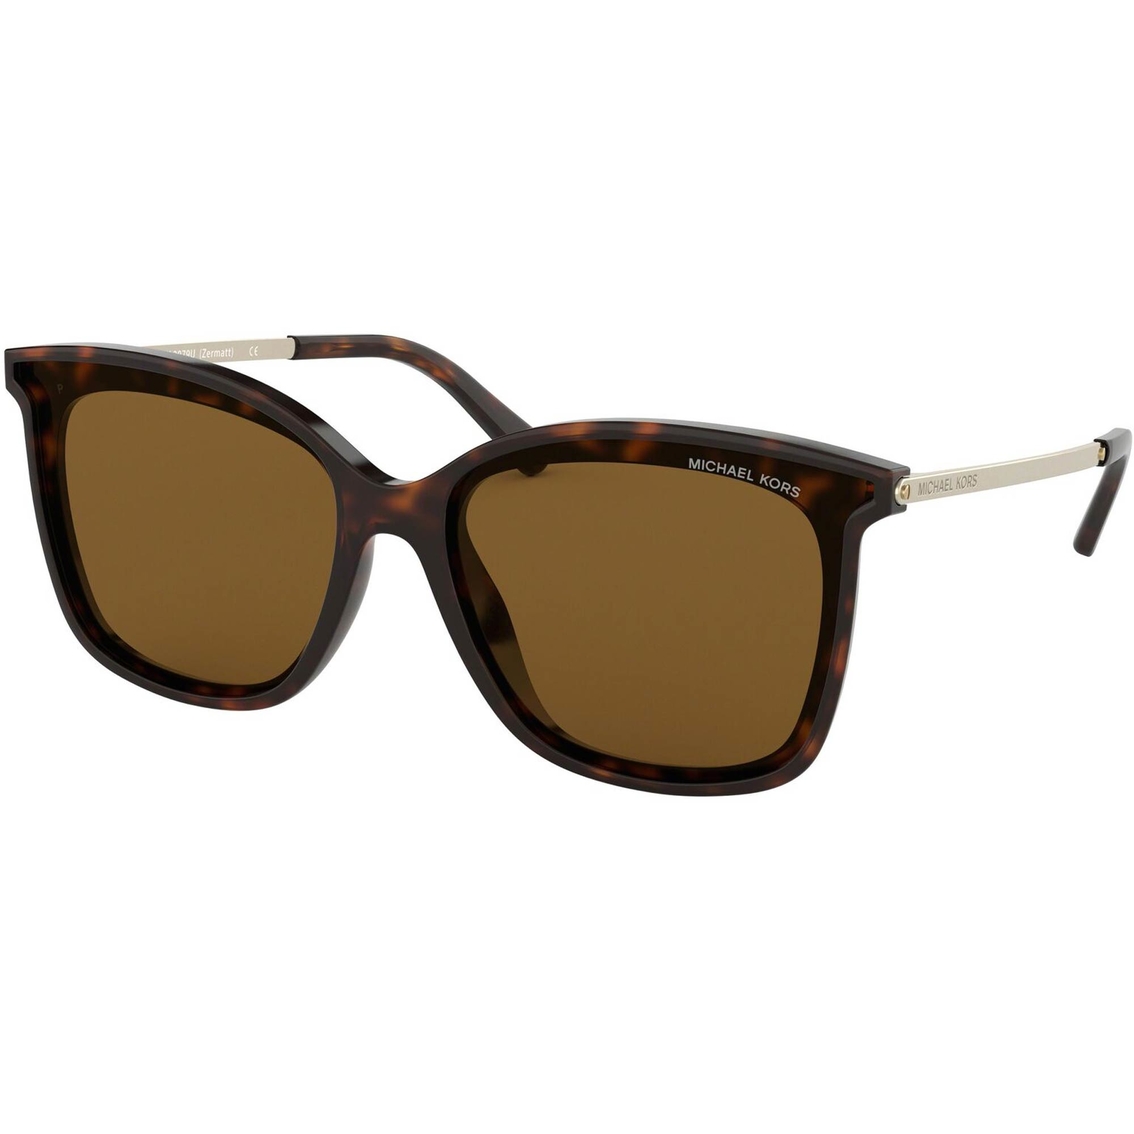 Michael Kors Square Solid Polarized Sunglasses 0mk2079u333383 | Women's ...